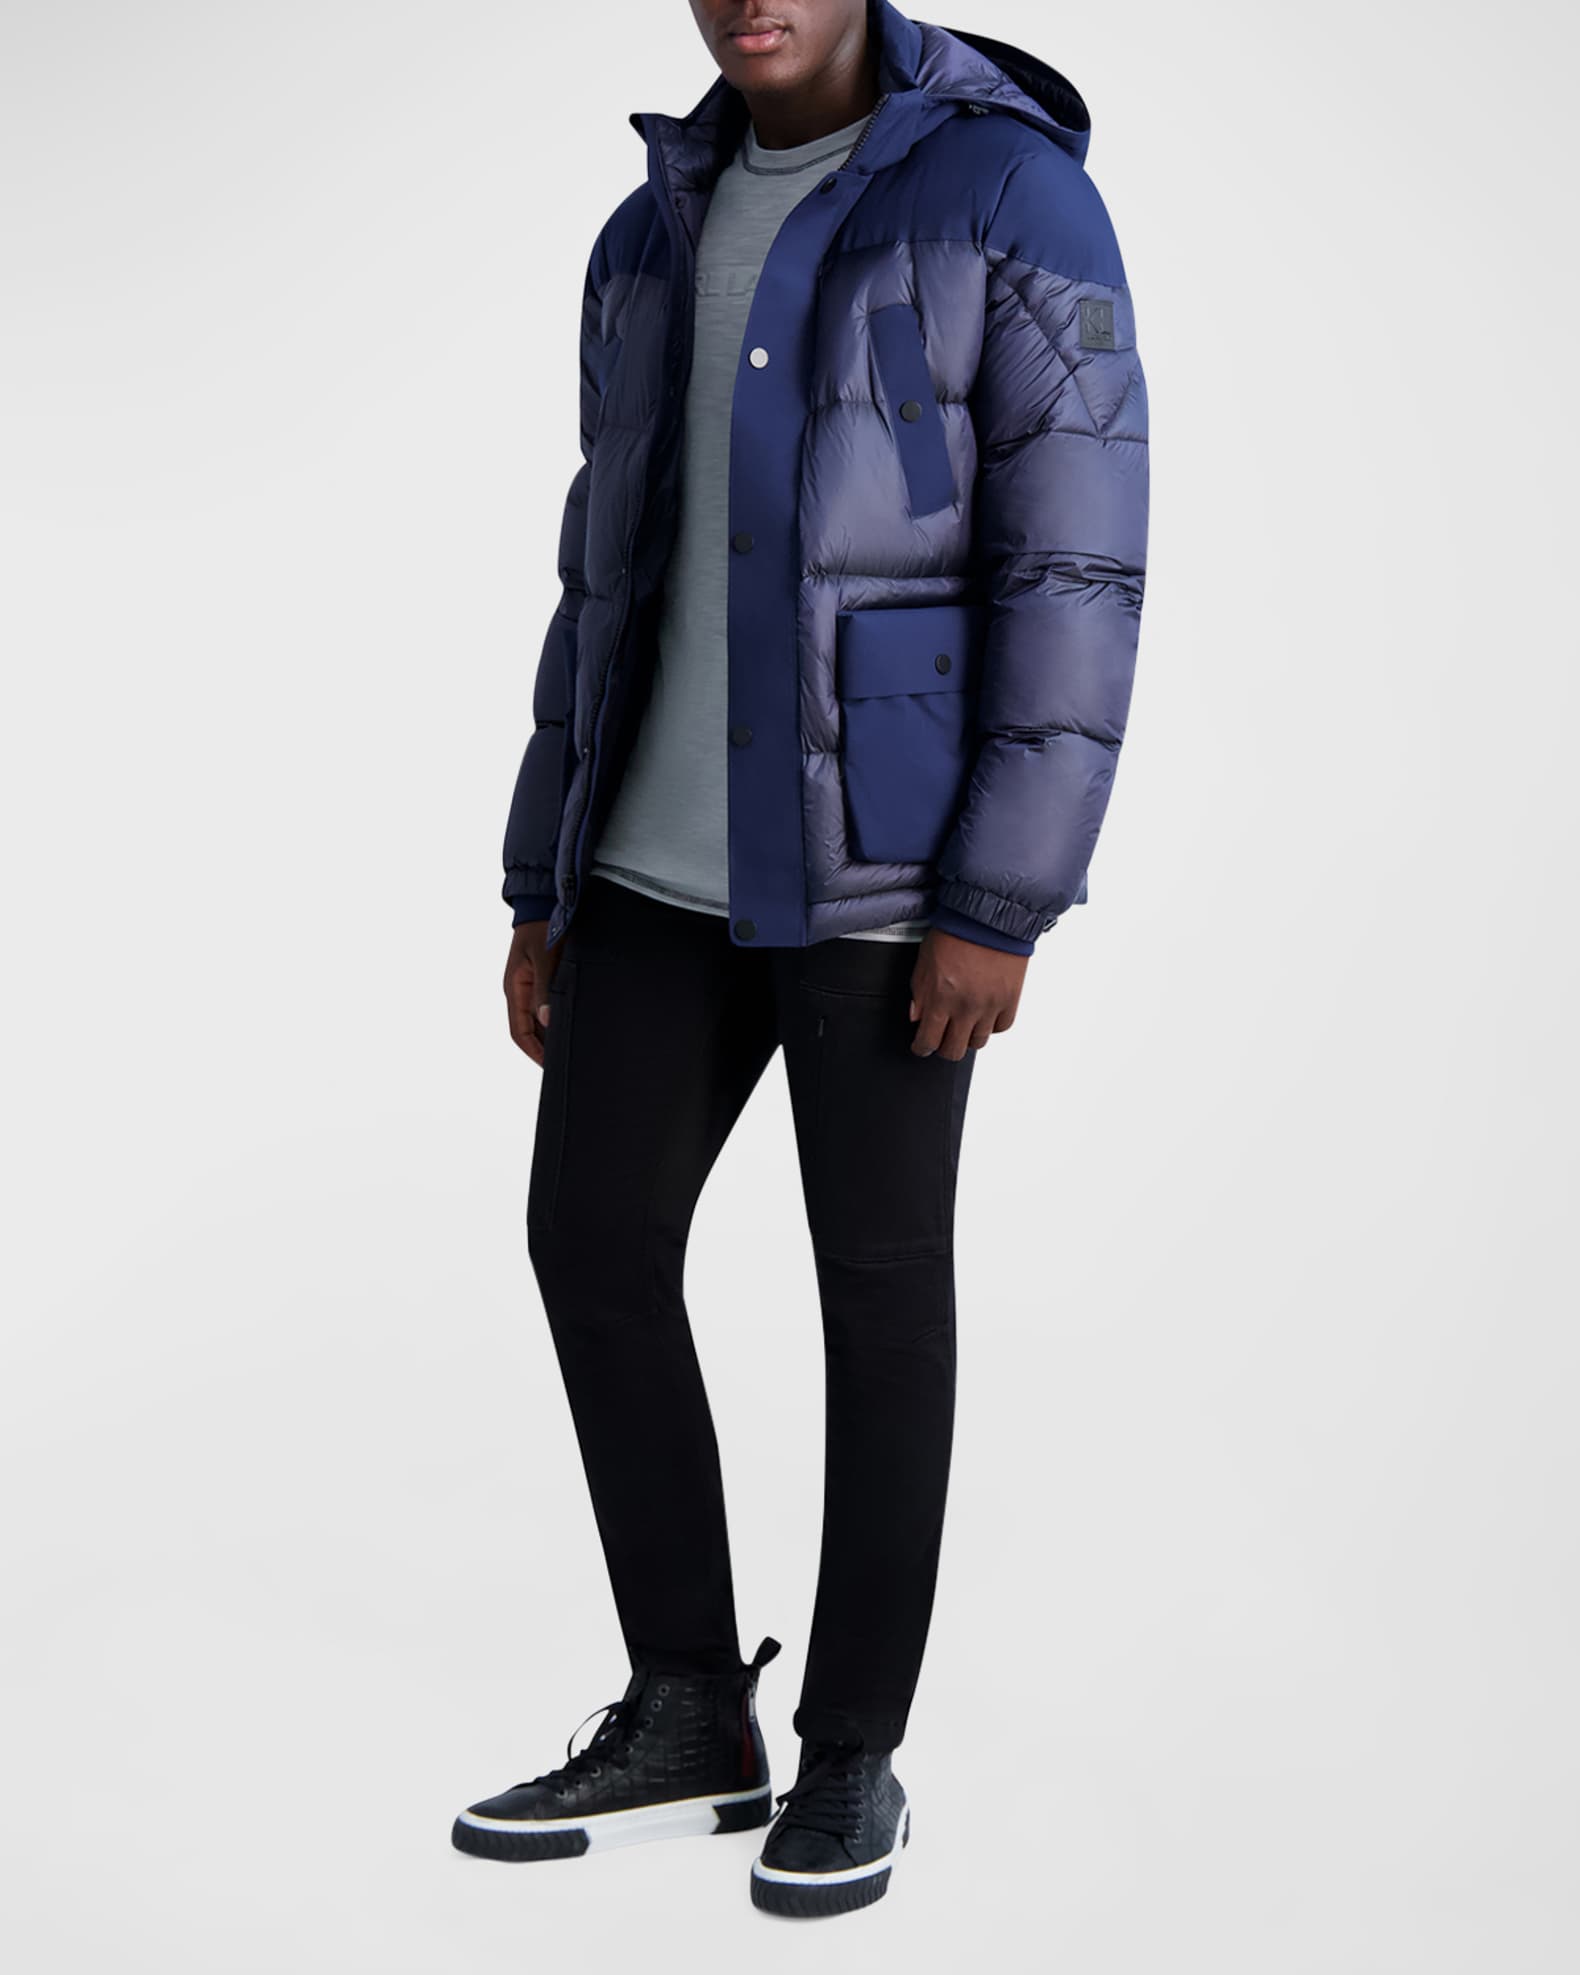 Karl Lagerfeld Paris Men's Reflective Puffer Jacket